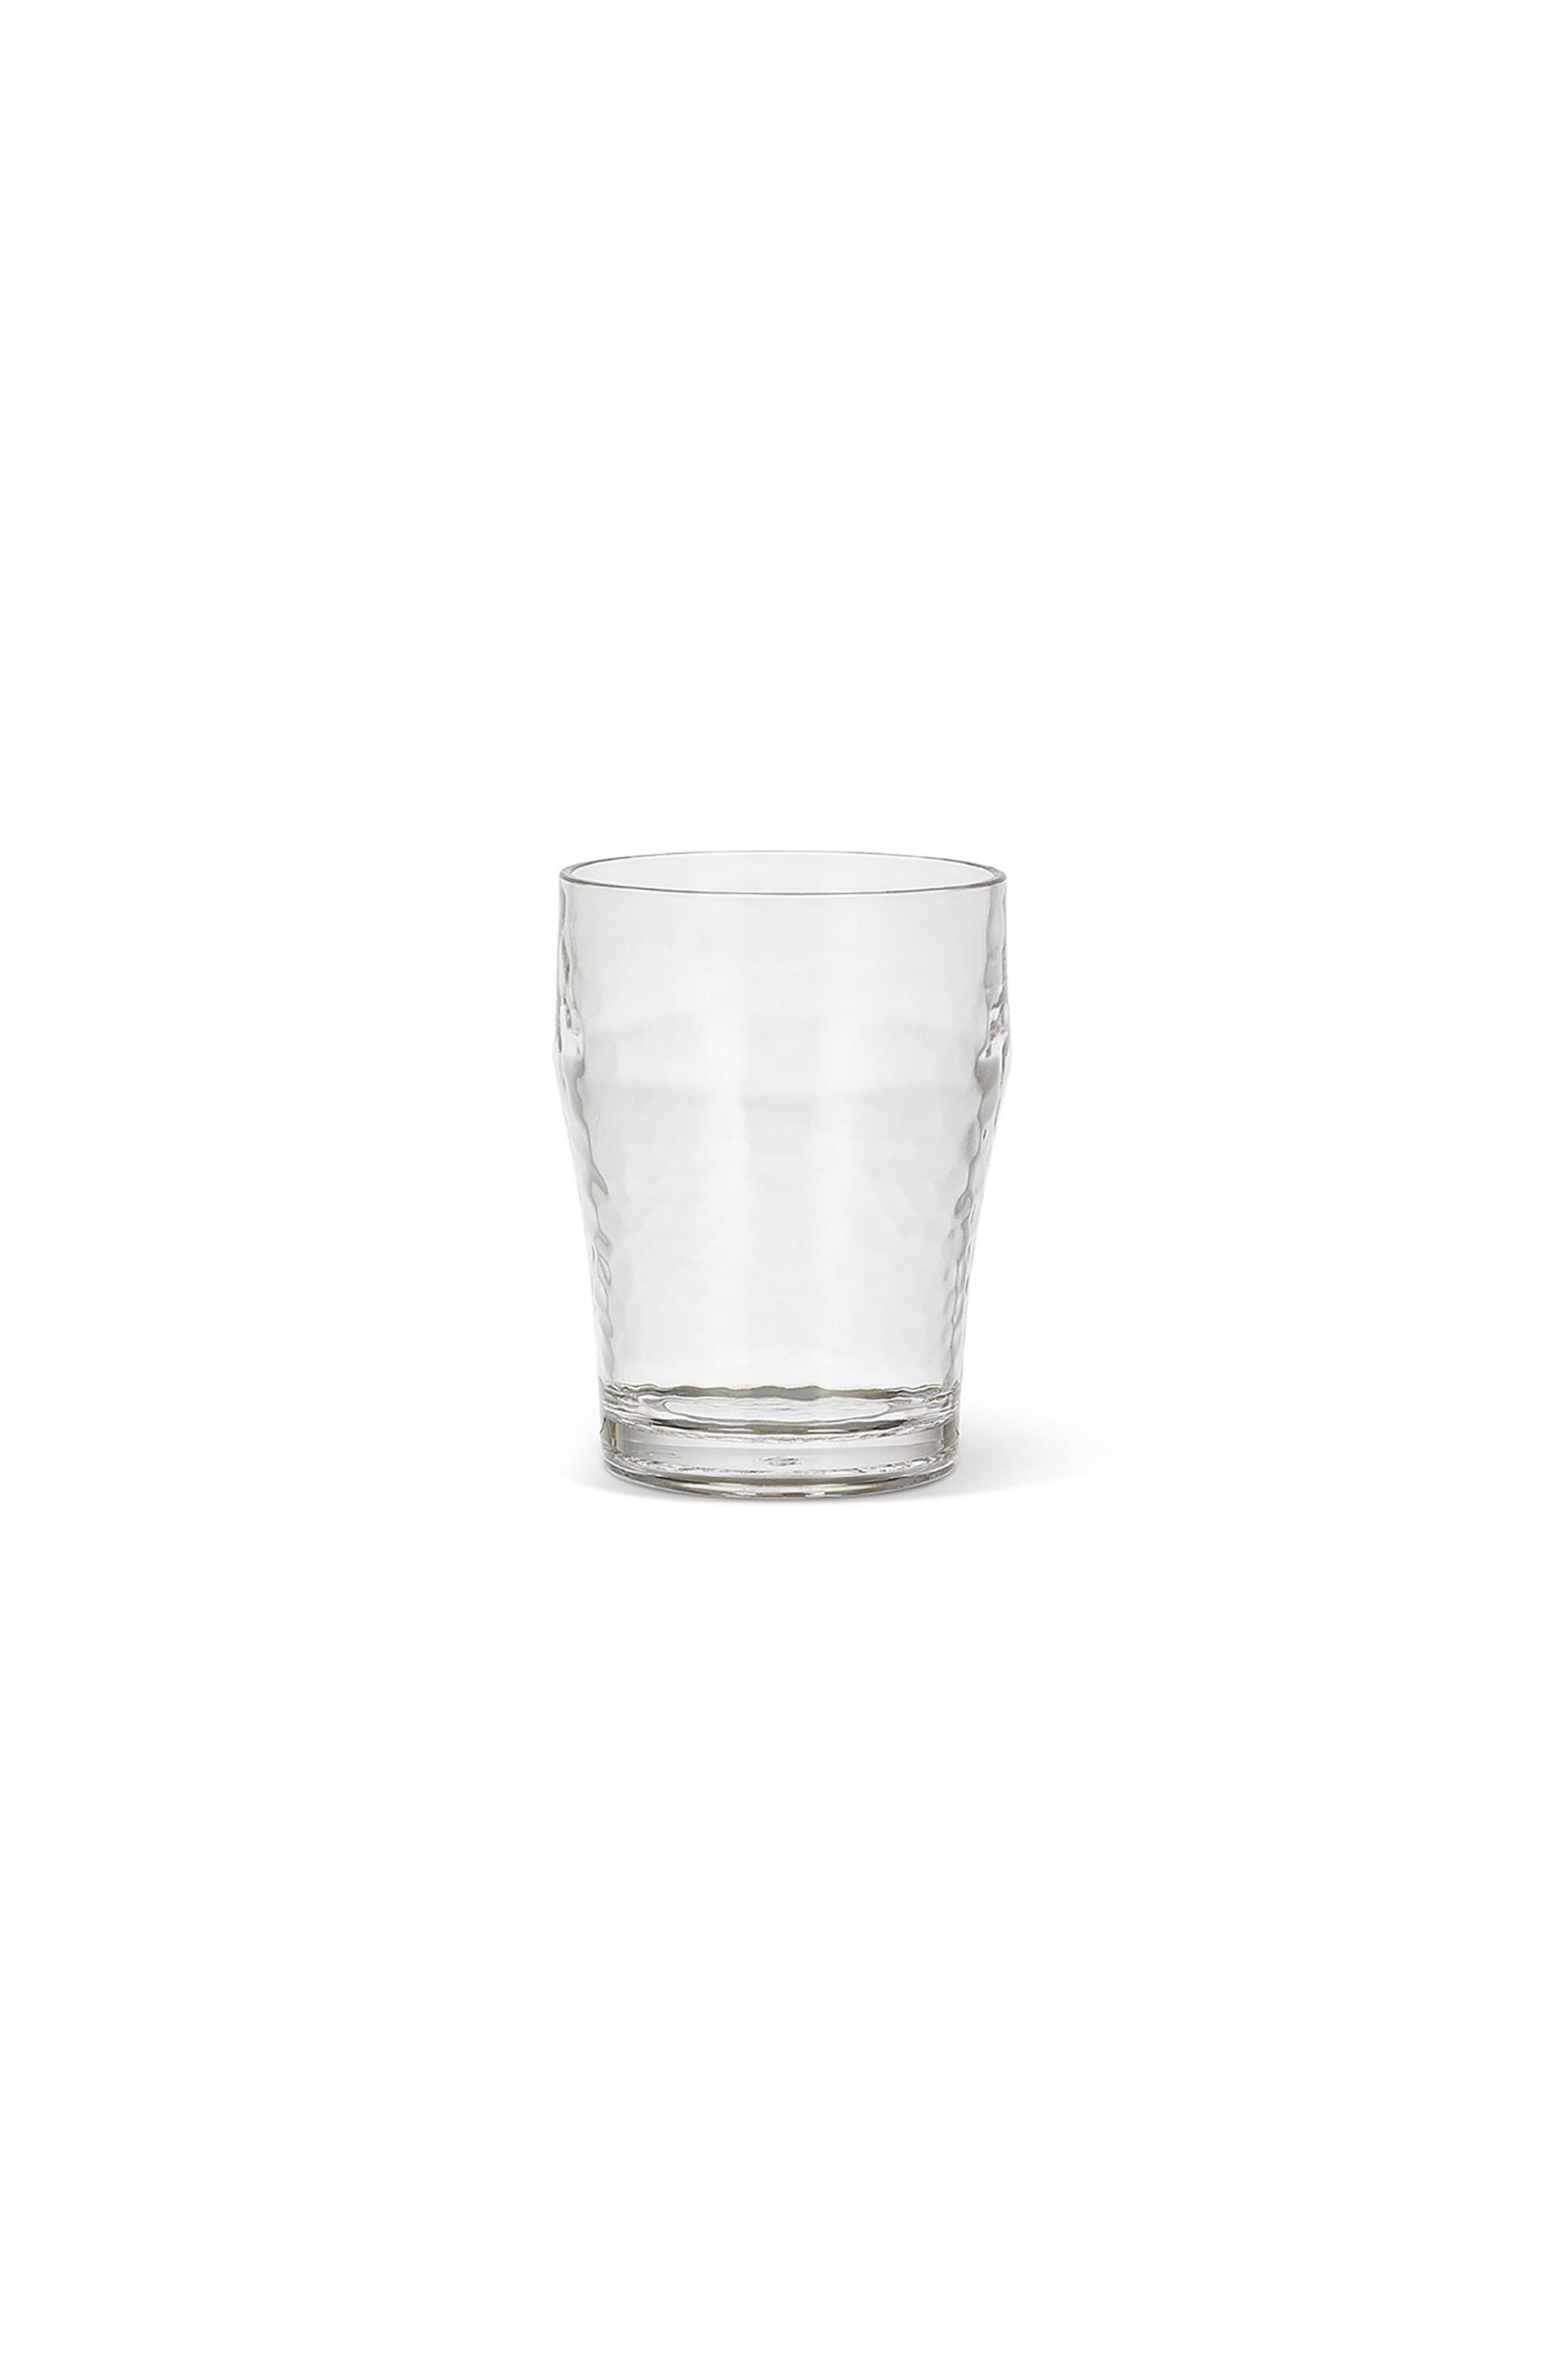 Home > ΚΟΥΖΙΝΑ > Υαλικά > Ποτήρια Coincasa πλαστικό ποτήρι με hammered effect 12 x 9 cm - 007365431 Διάφανο